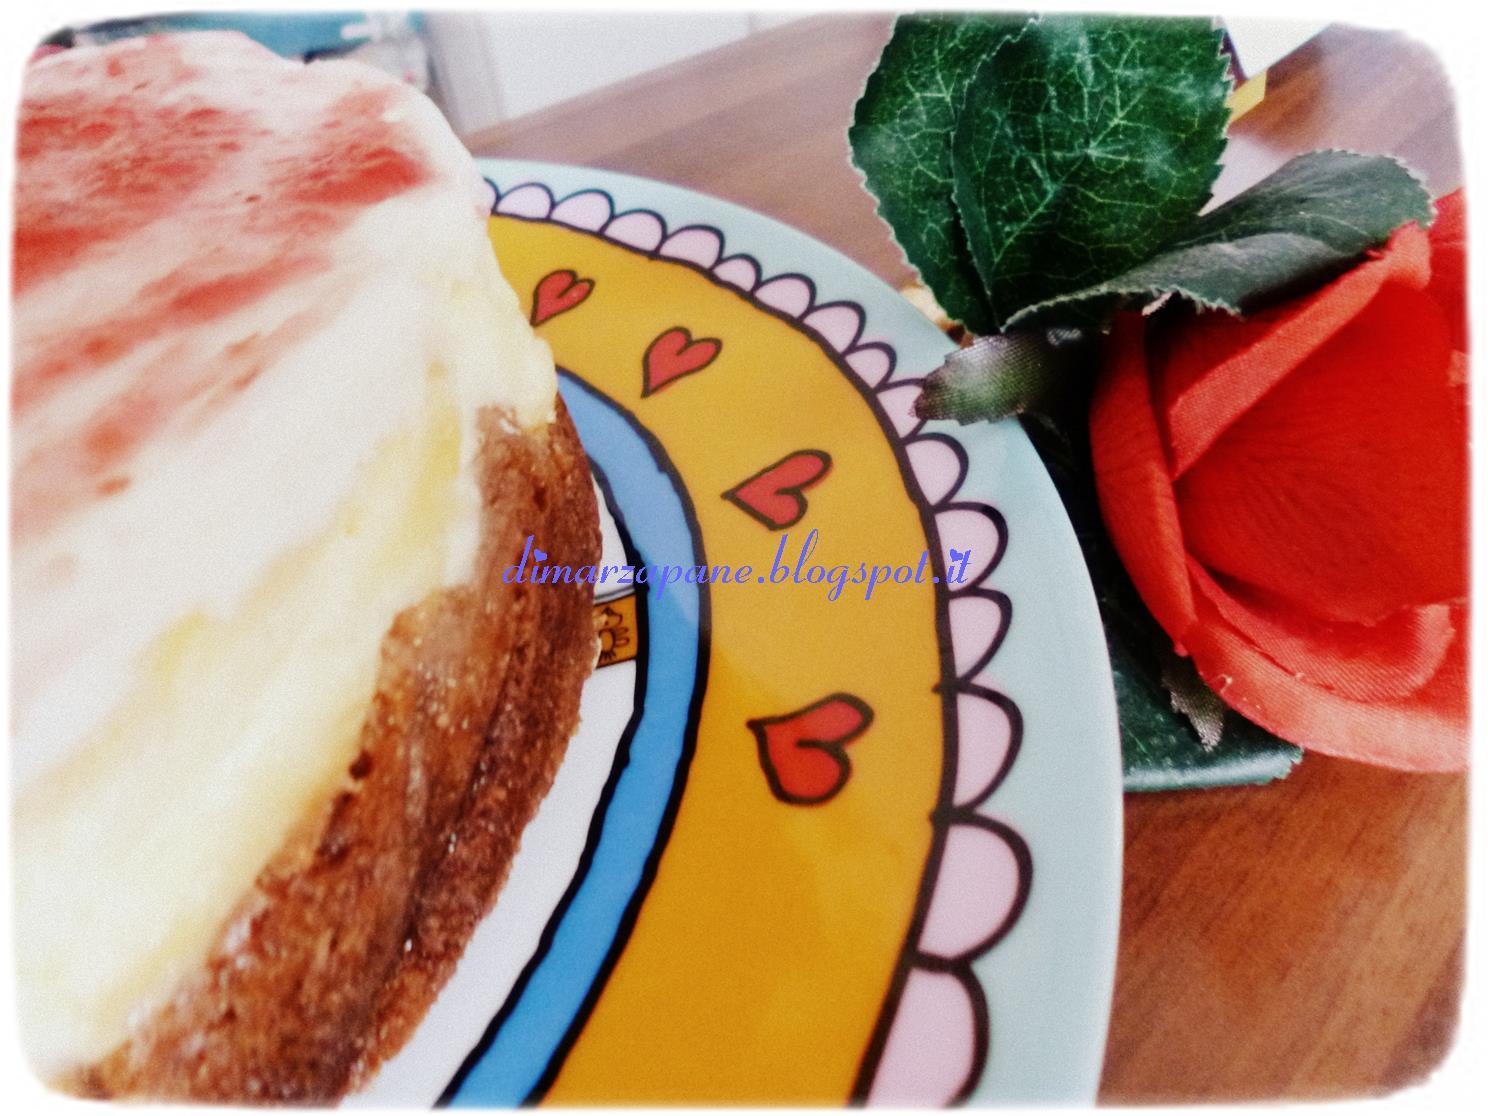 new york cheesecake alla gelatina di rose